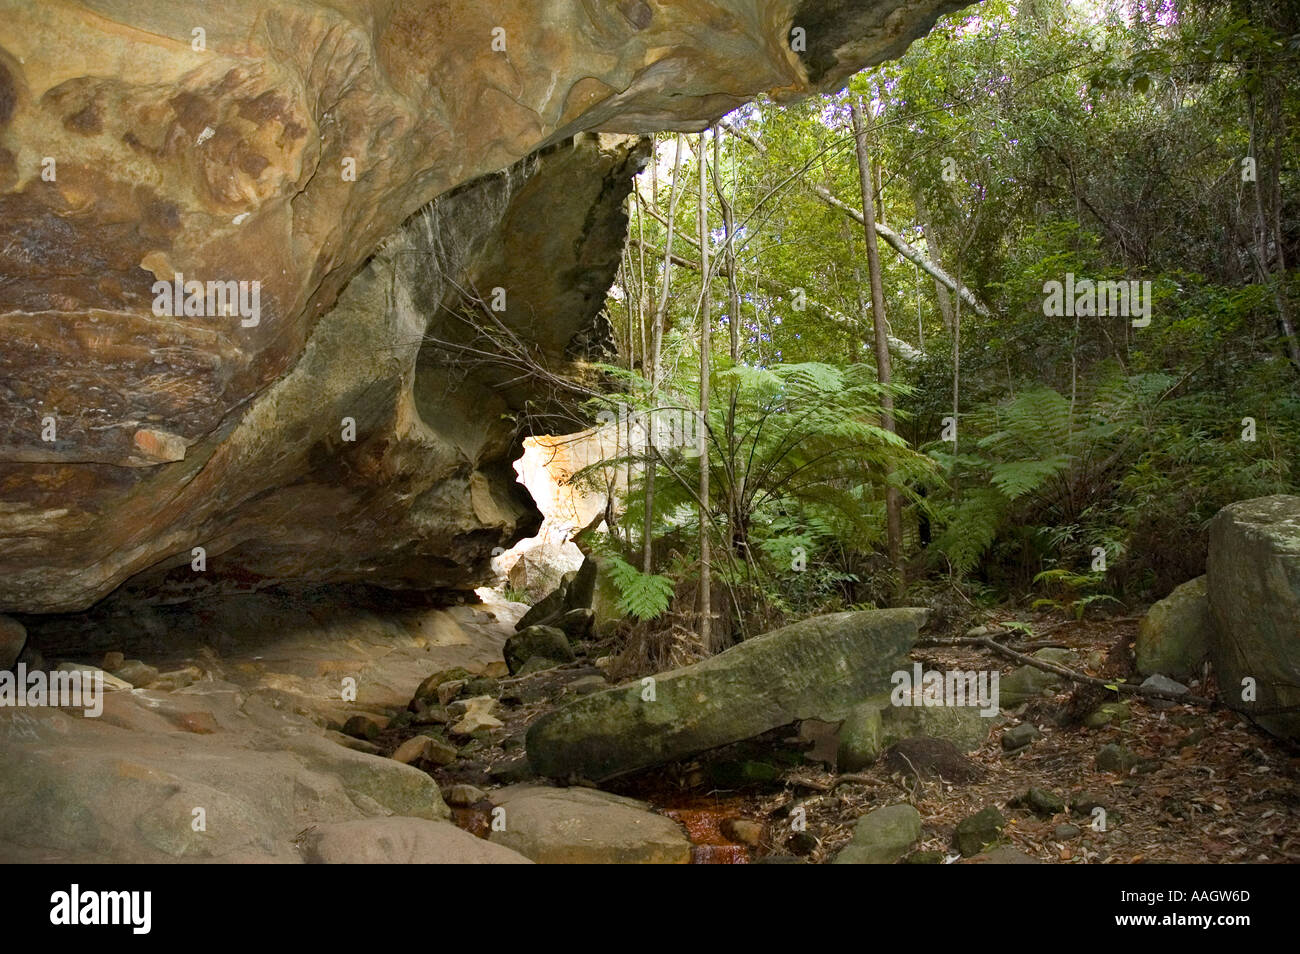 Gorge Cania Central Queensland Australie 3421 Banque D'Images